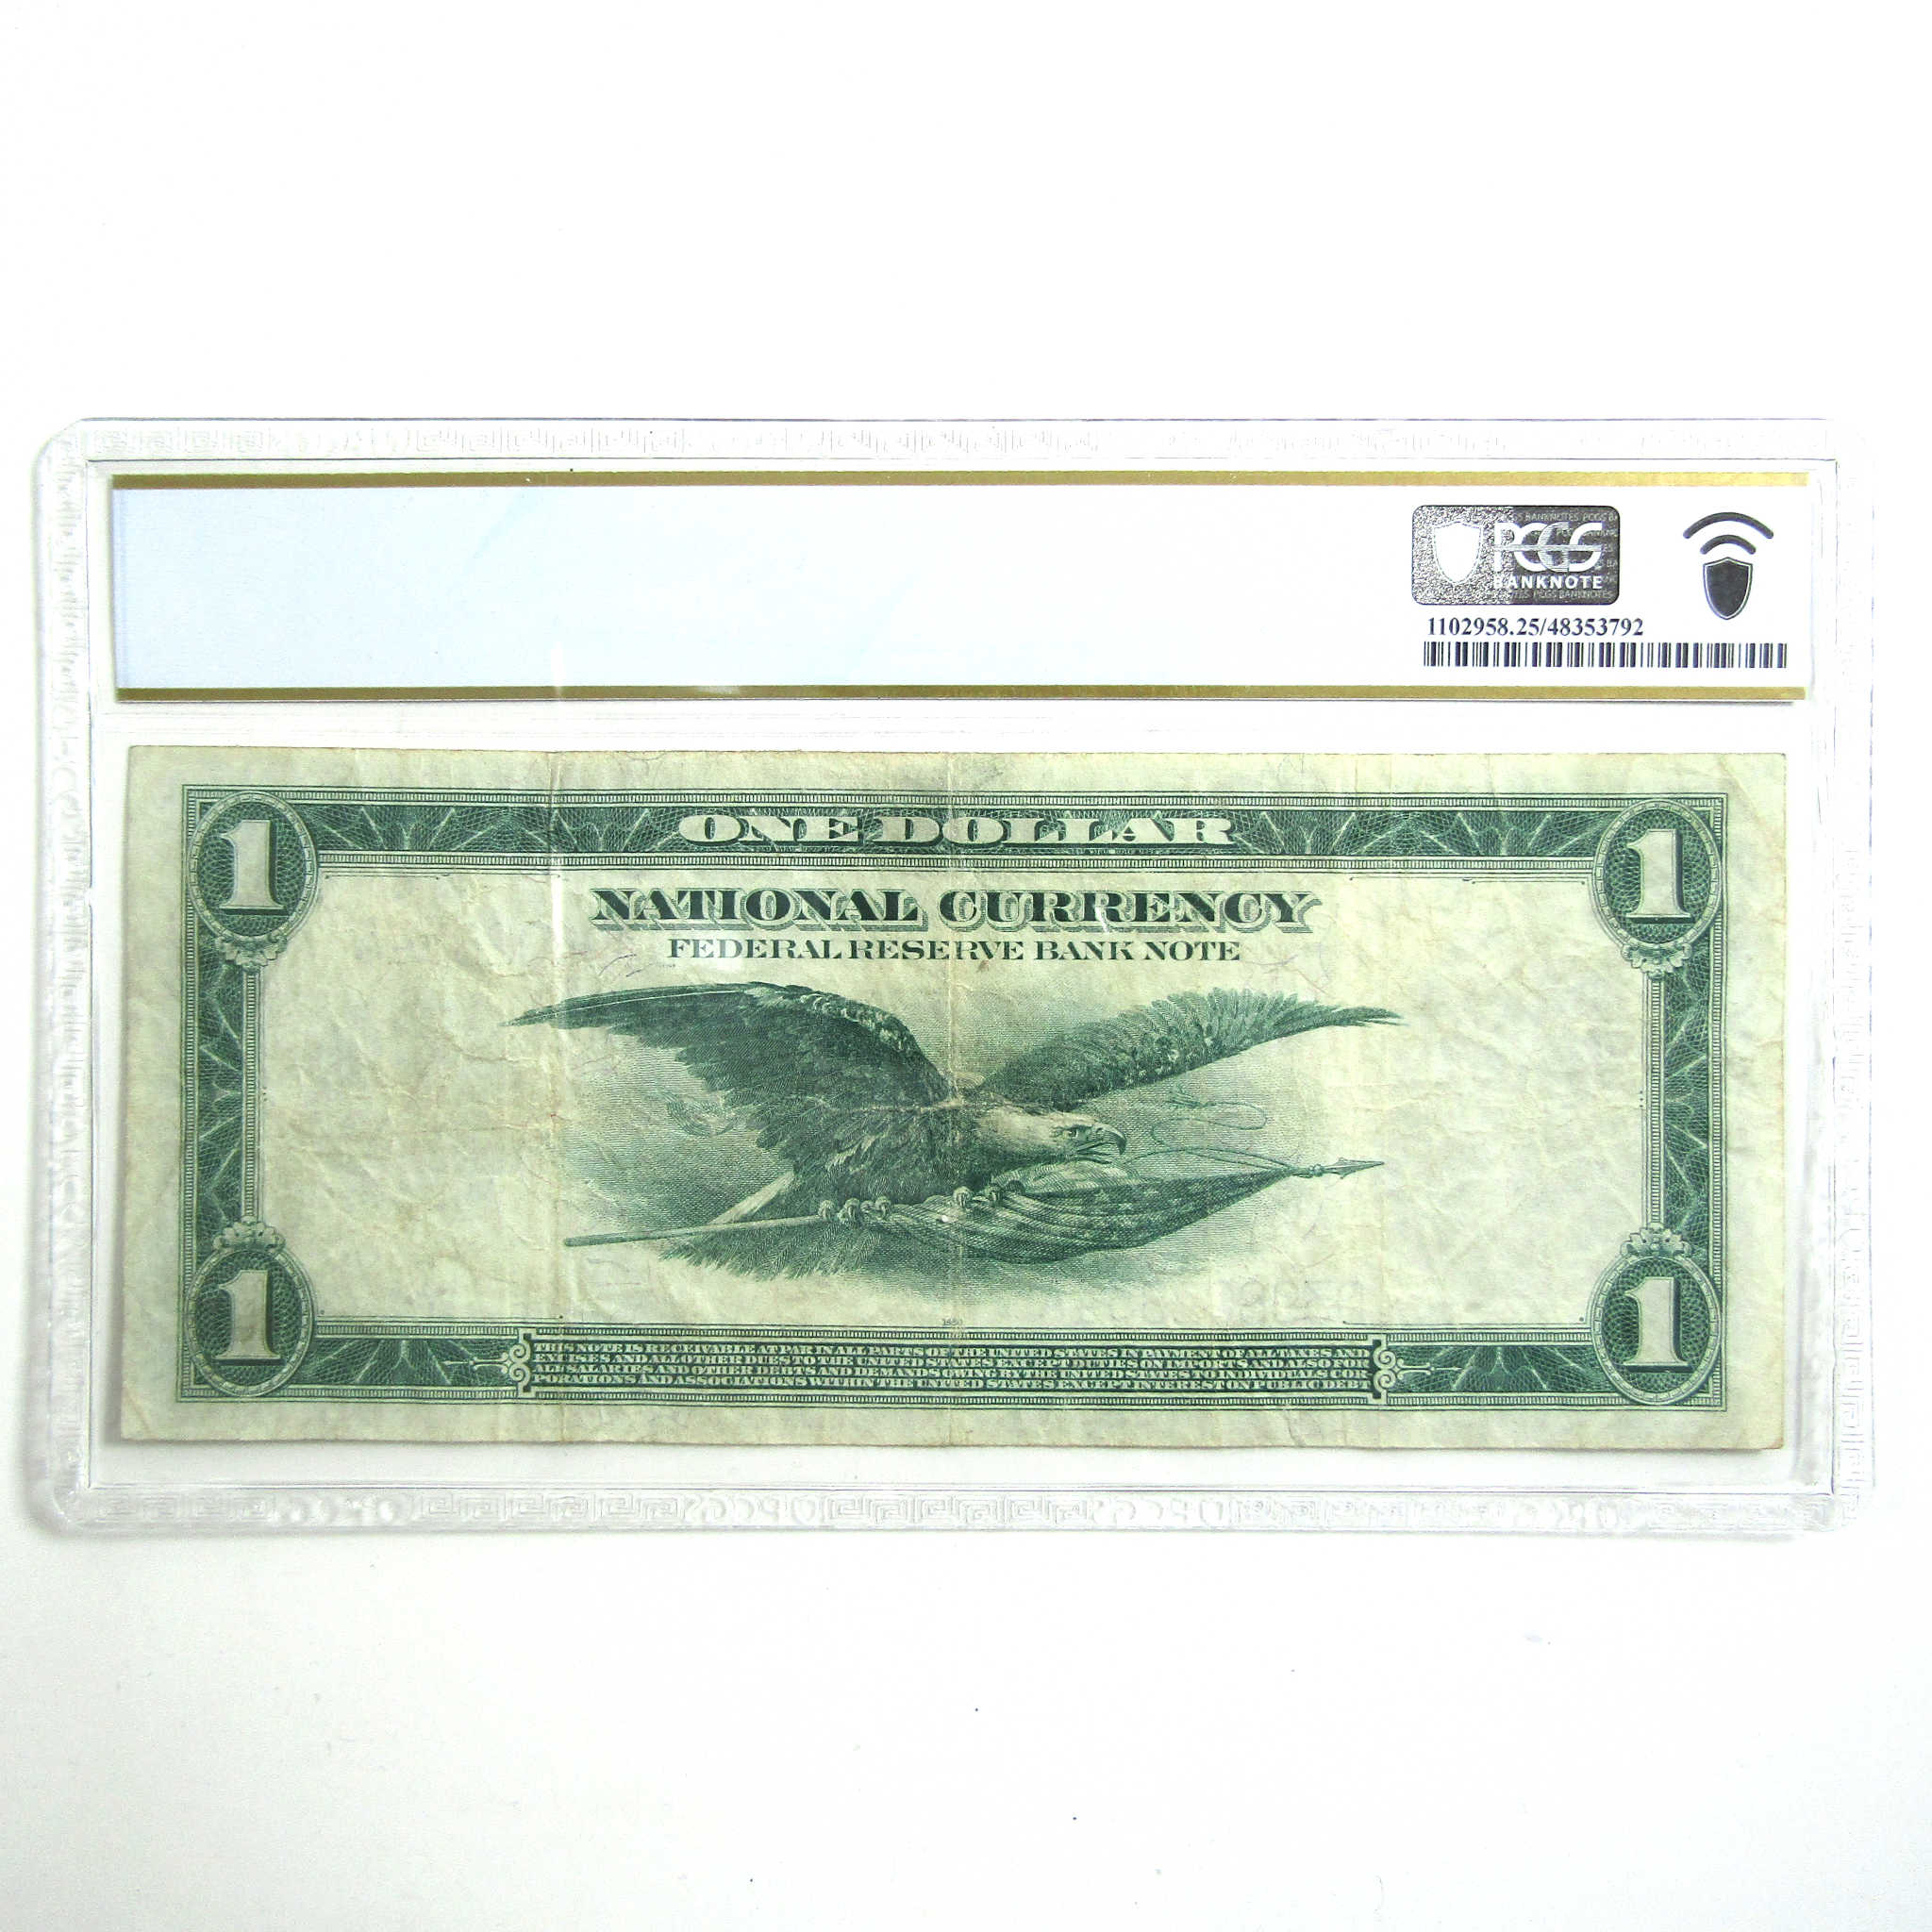 1918 $1 Federal Reserve Bank Note Very Fine 25 PCGS SKU:I10775